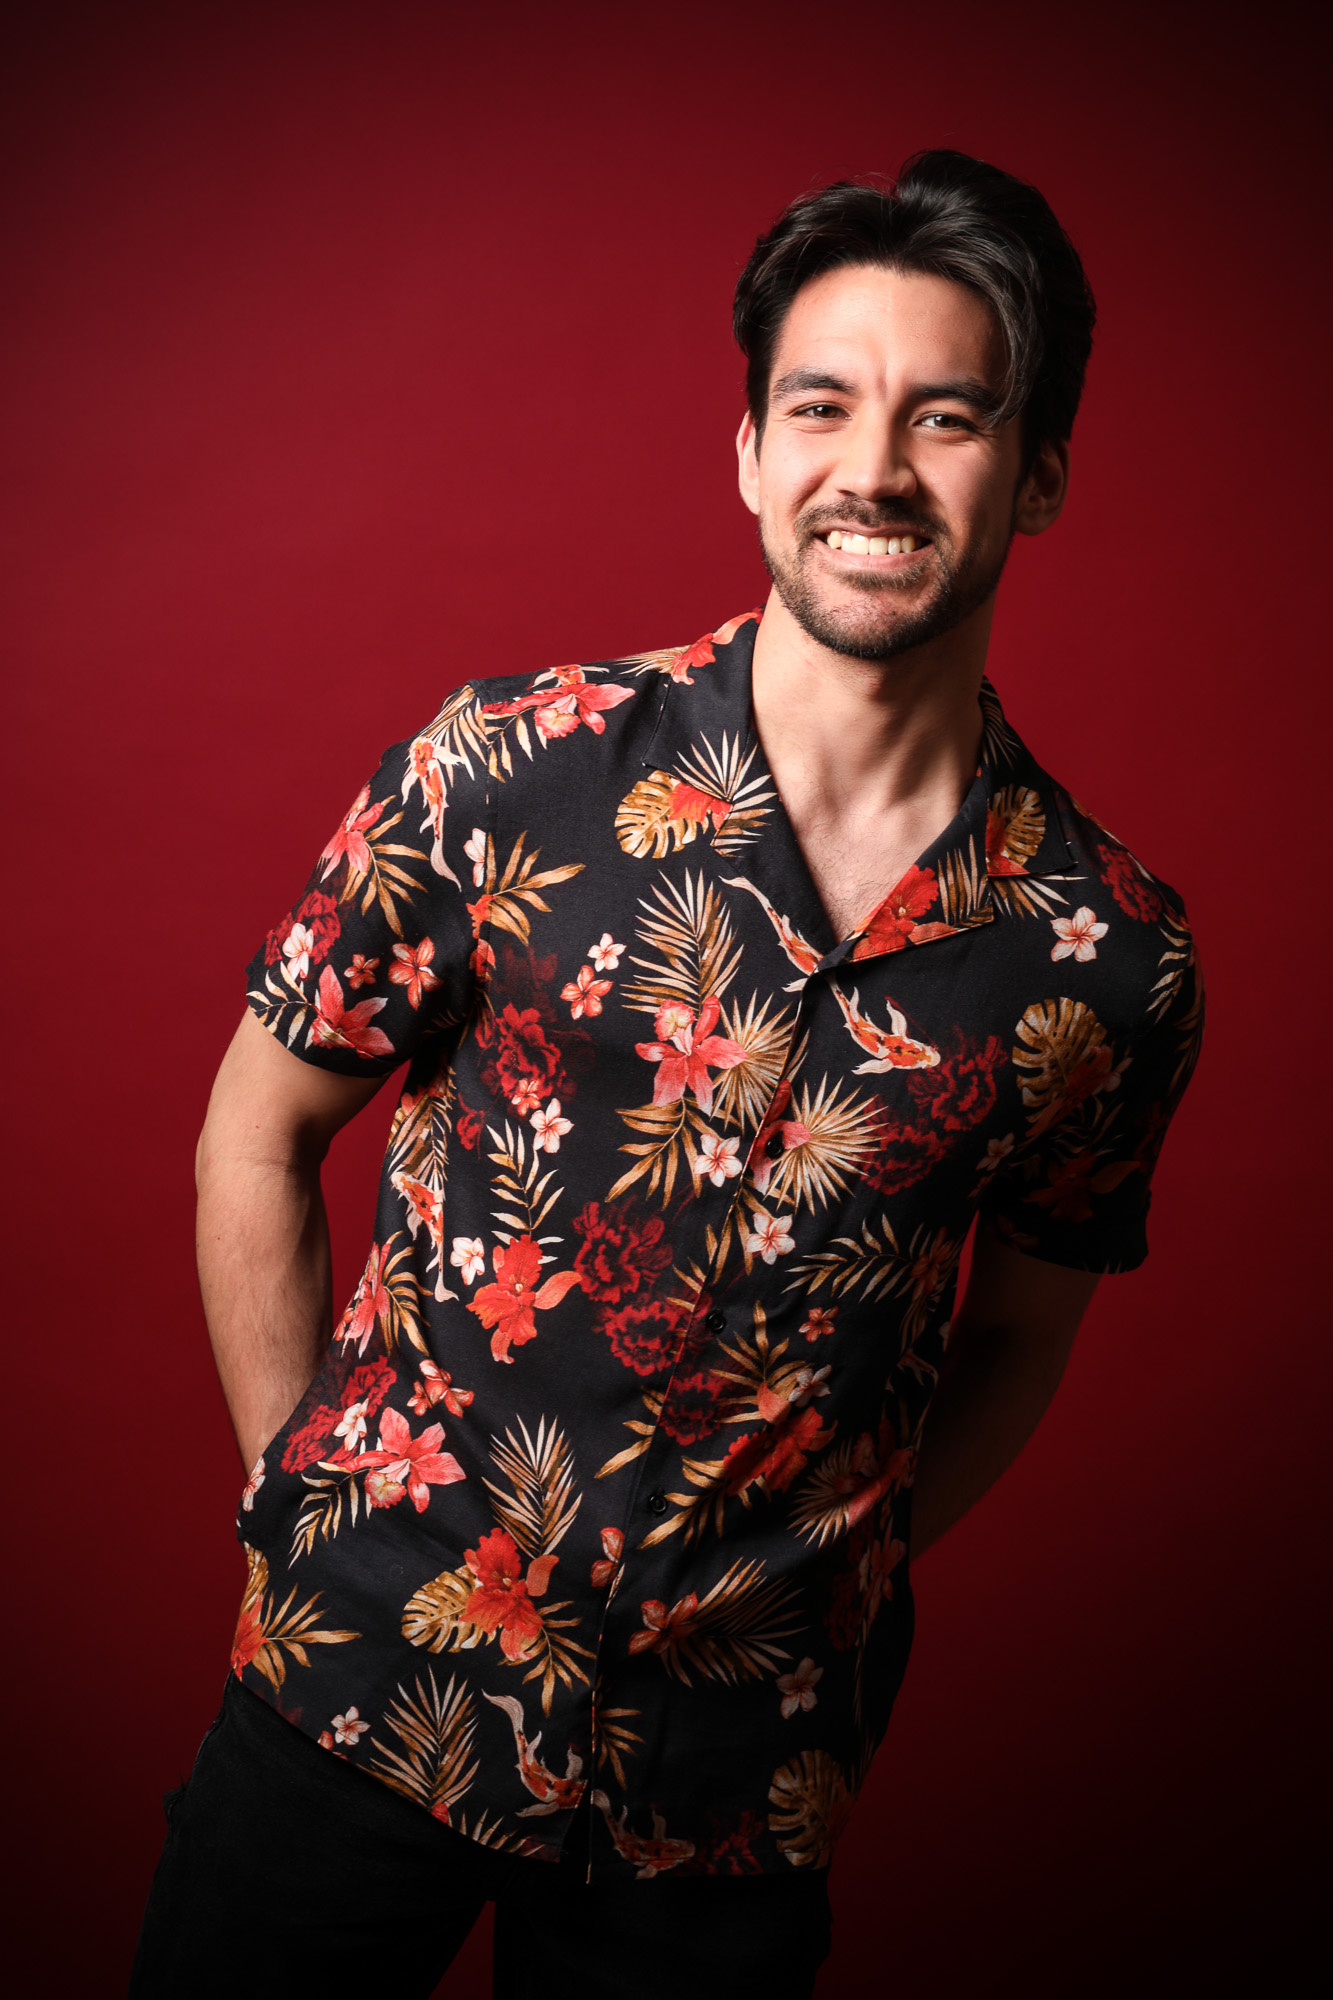 mens photoshoot red backdrop hawaiian shirt